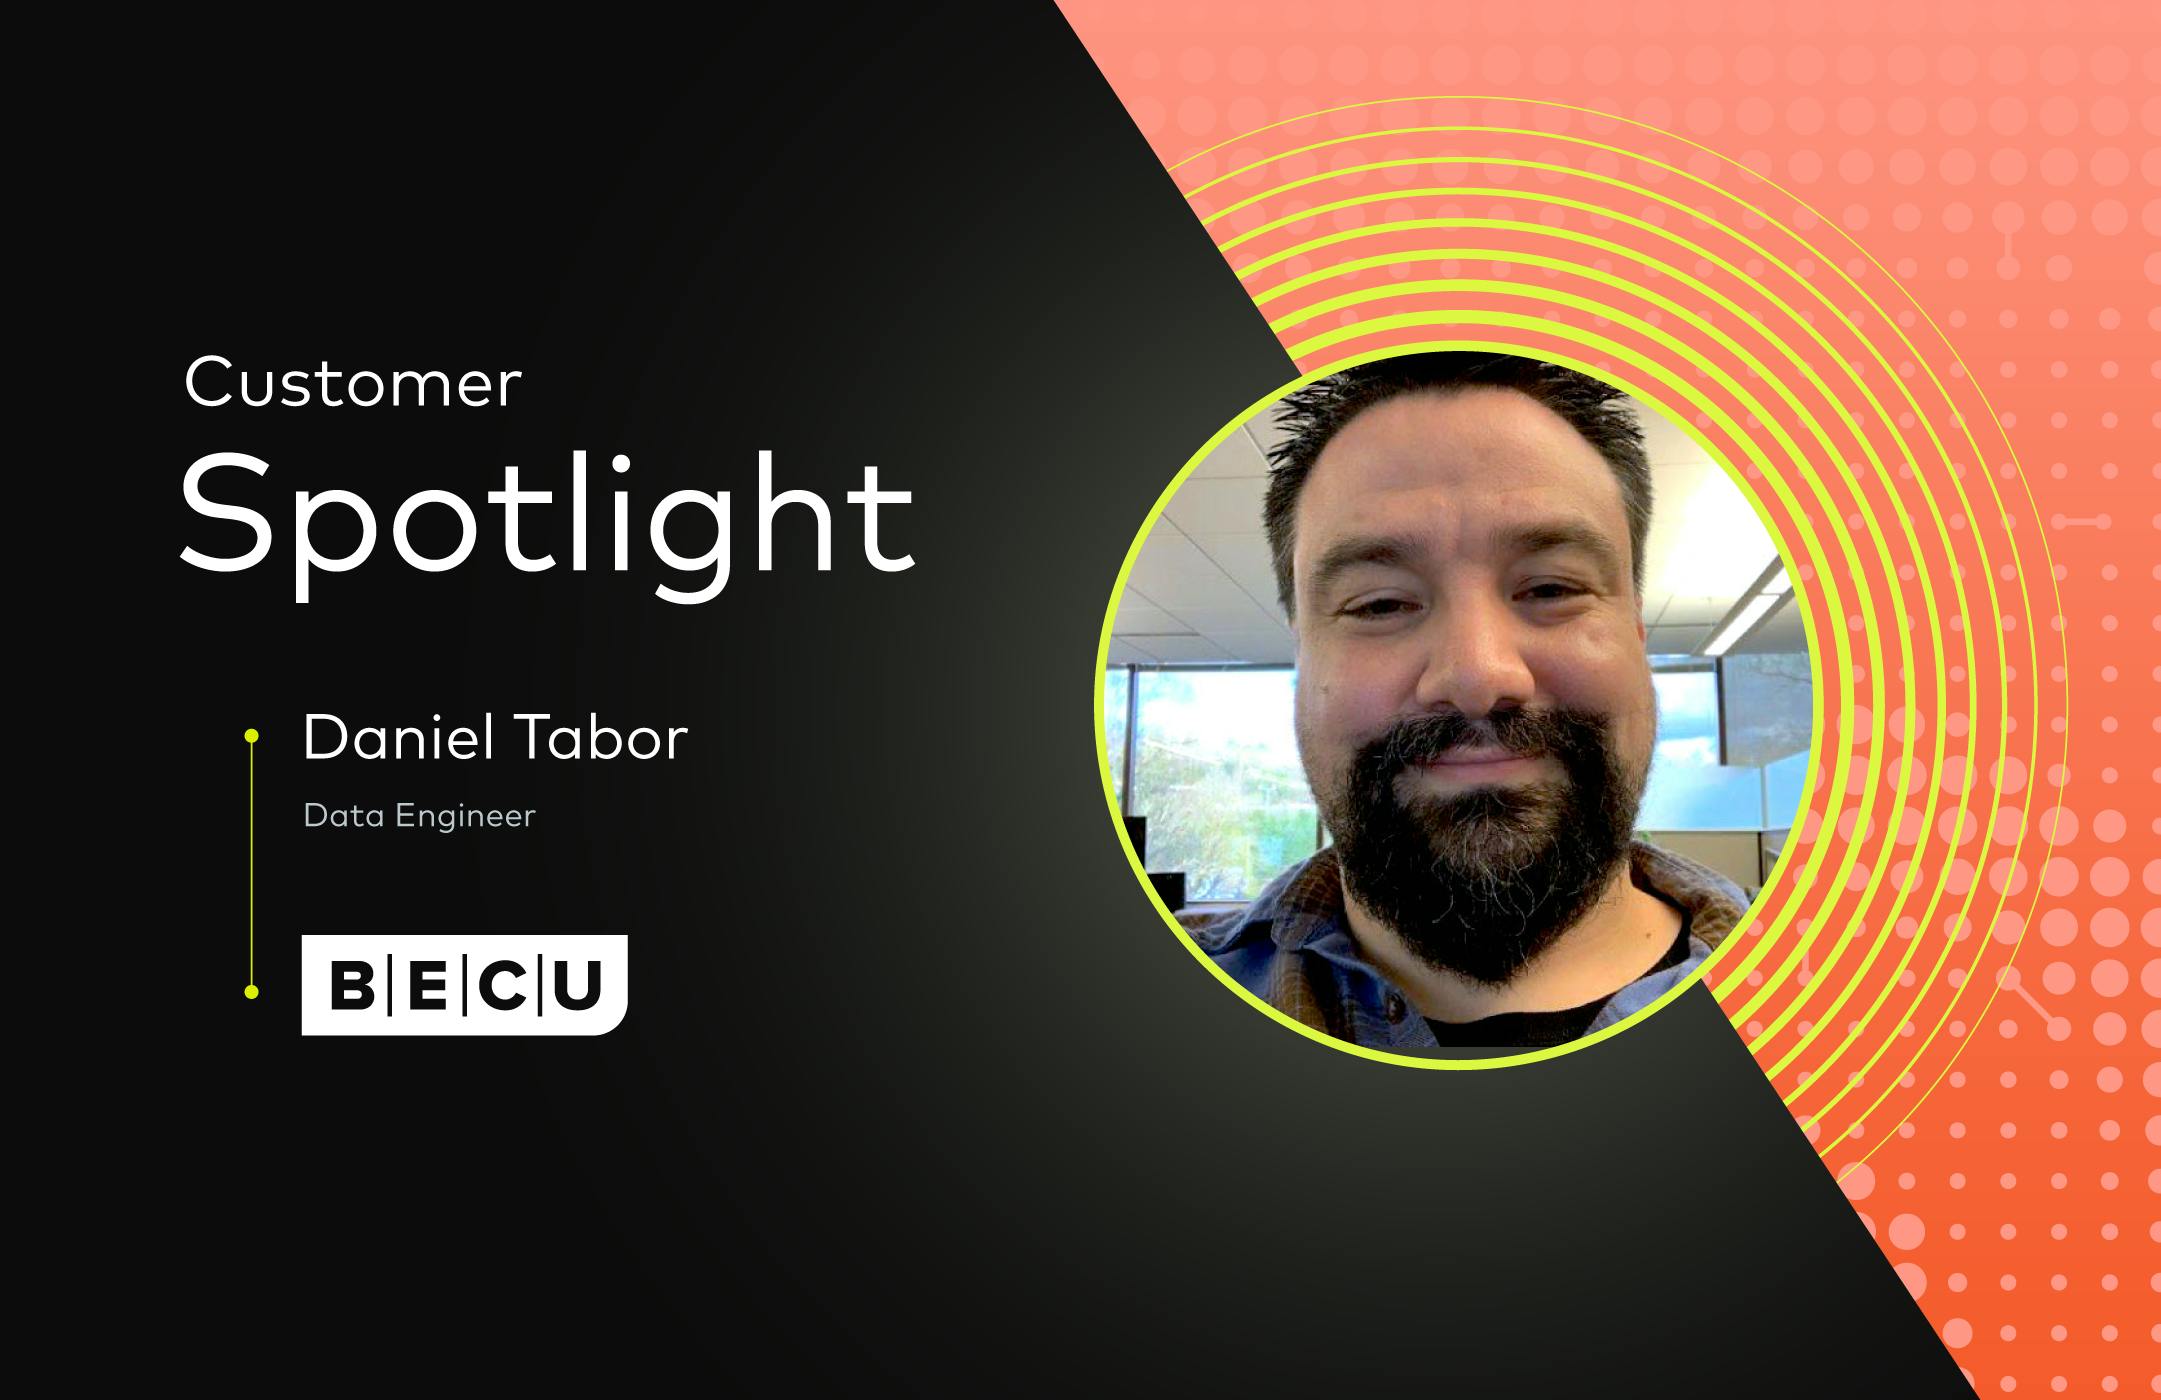 Customer Spotlight for Daniel Tudor, Data Engineer from BECU